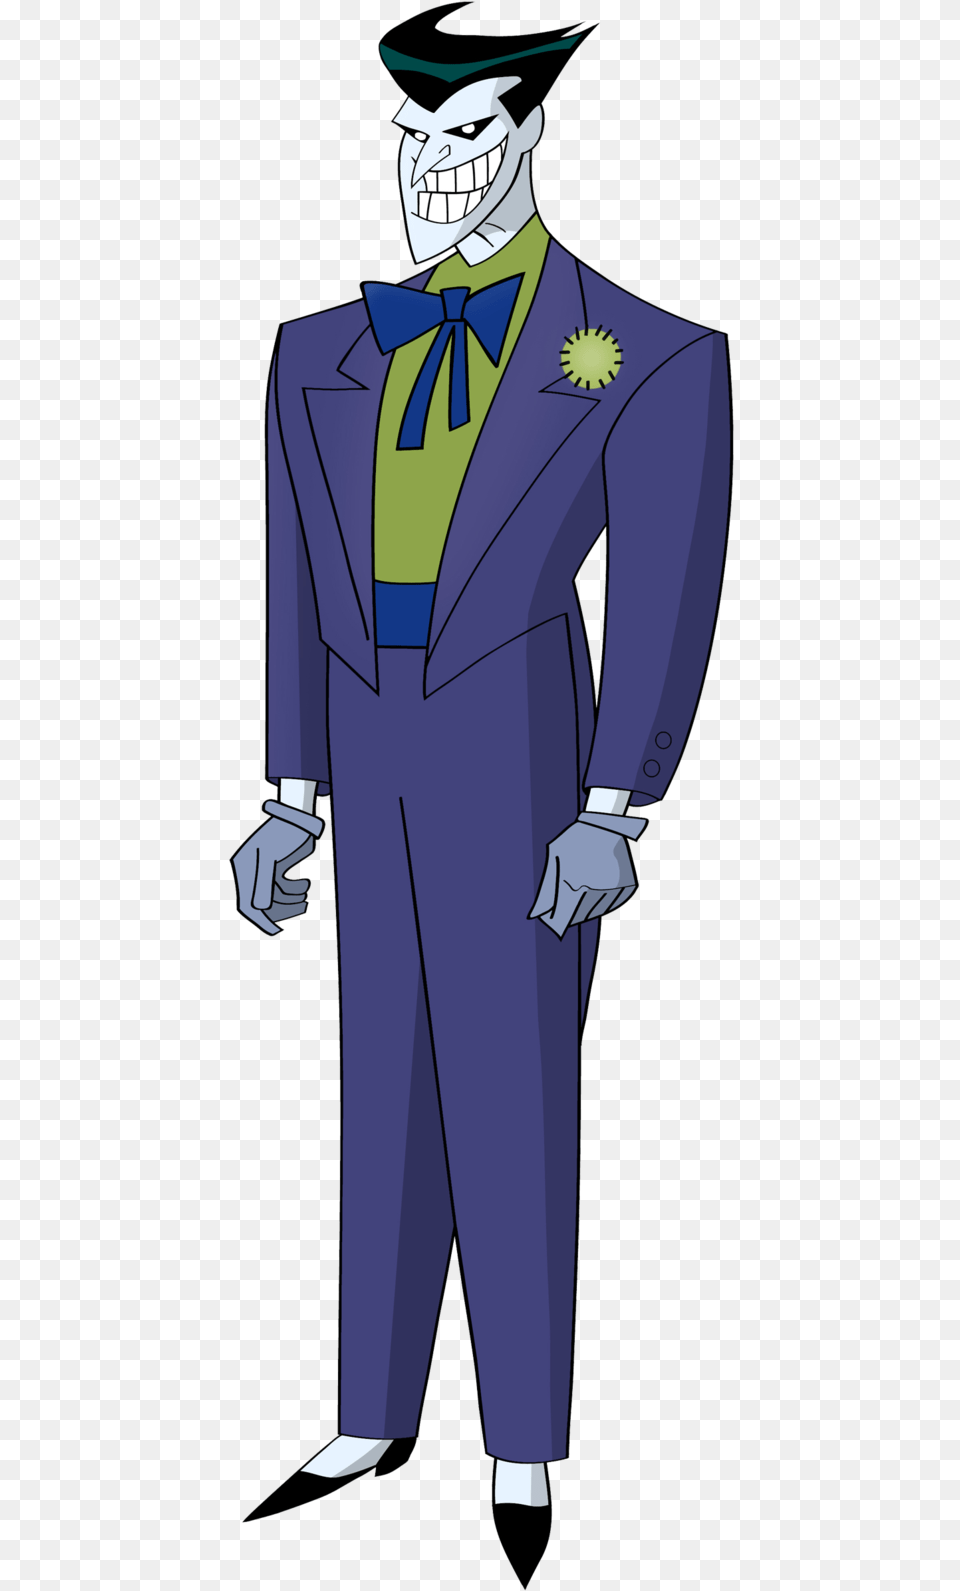 The Joker By Dawidarte D897slq Joker Animated Series, Tuxedo, Clothing, Suit, Formal Wear Png Image